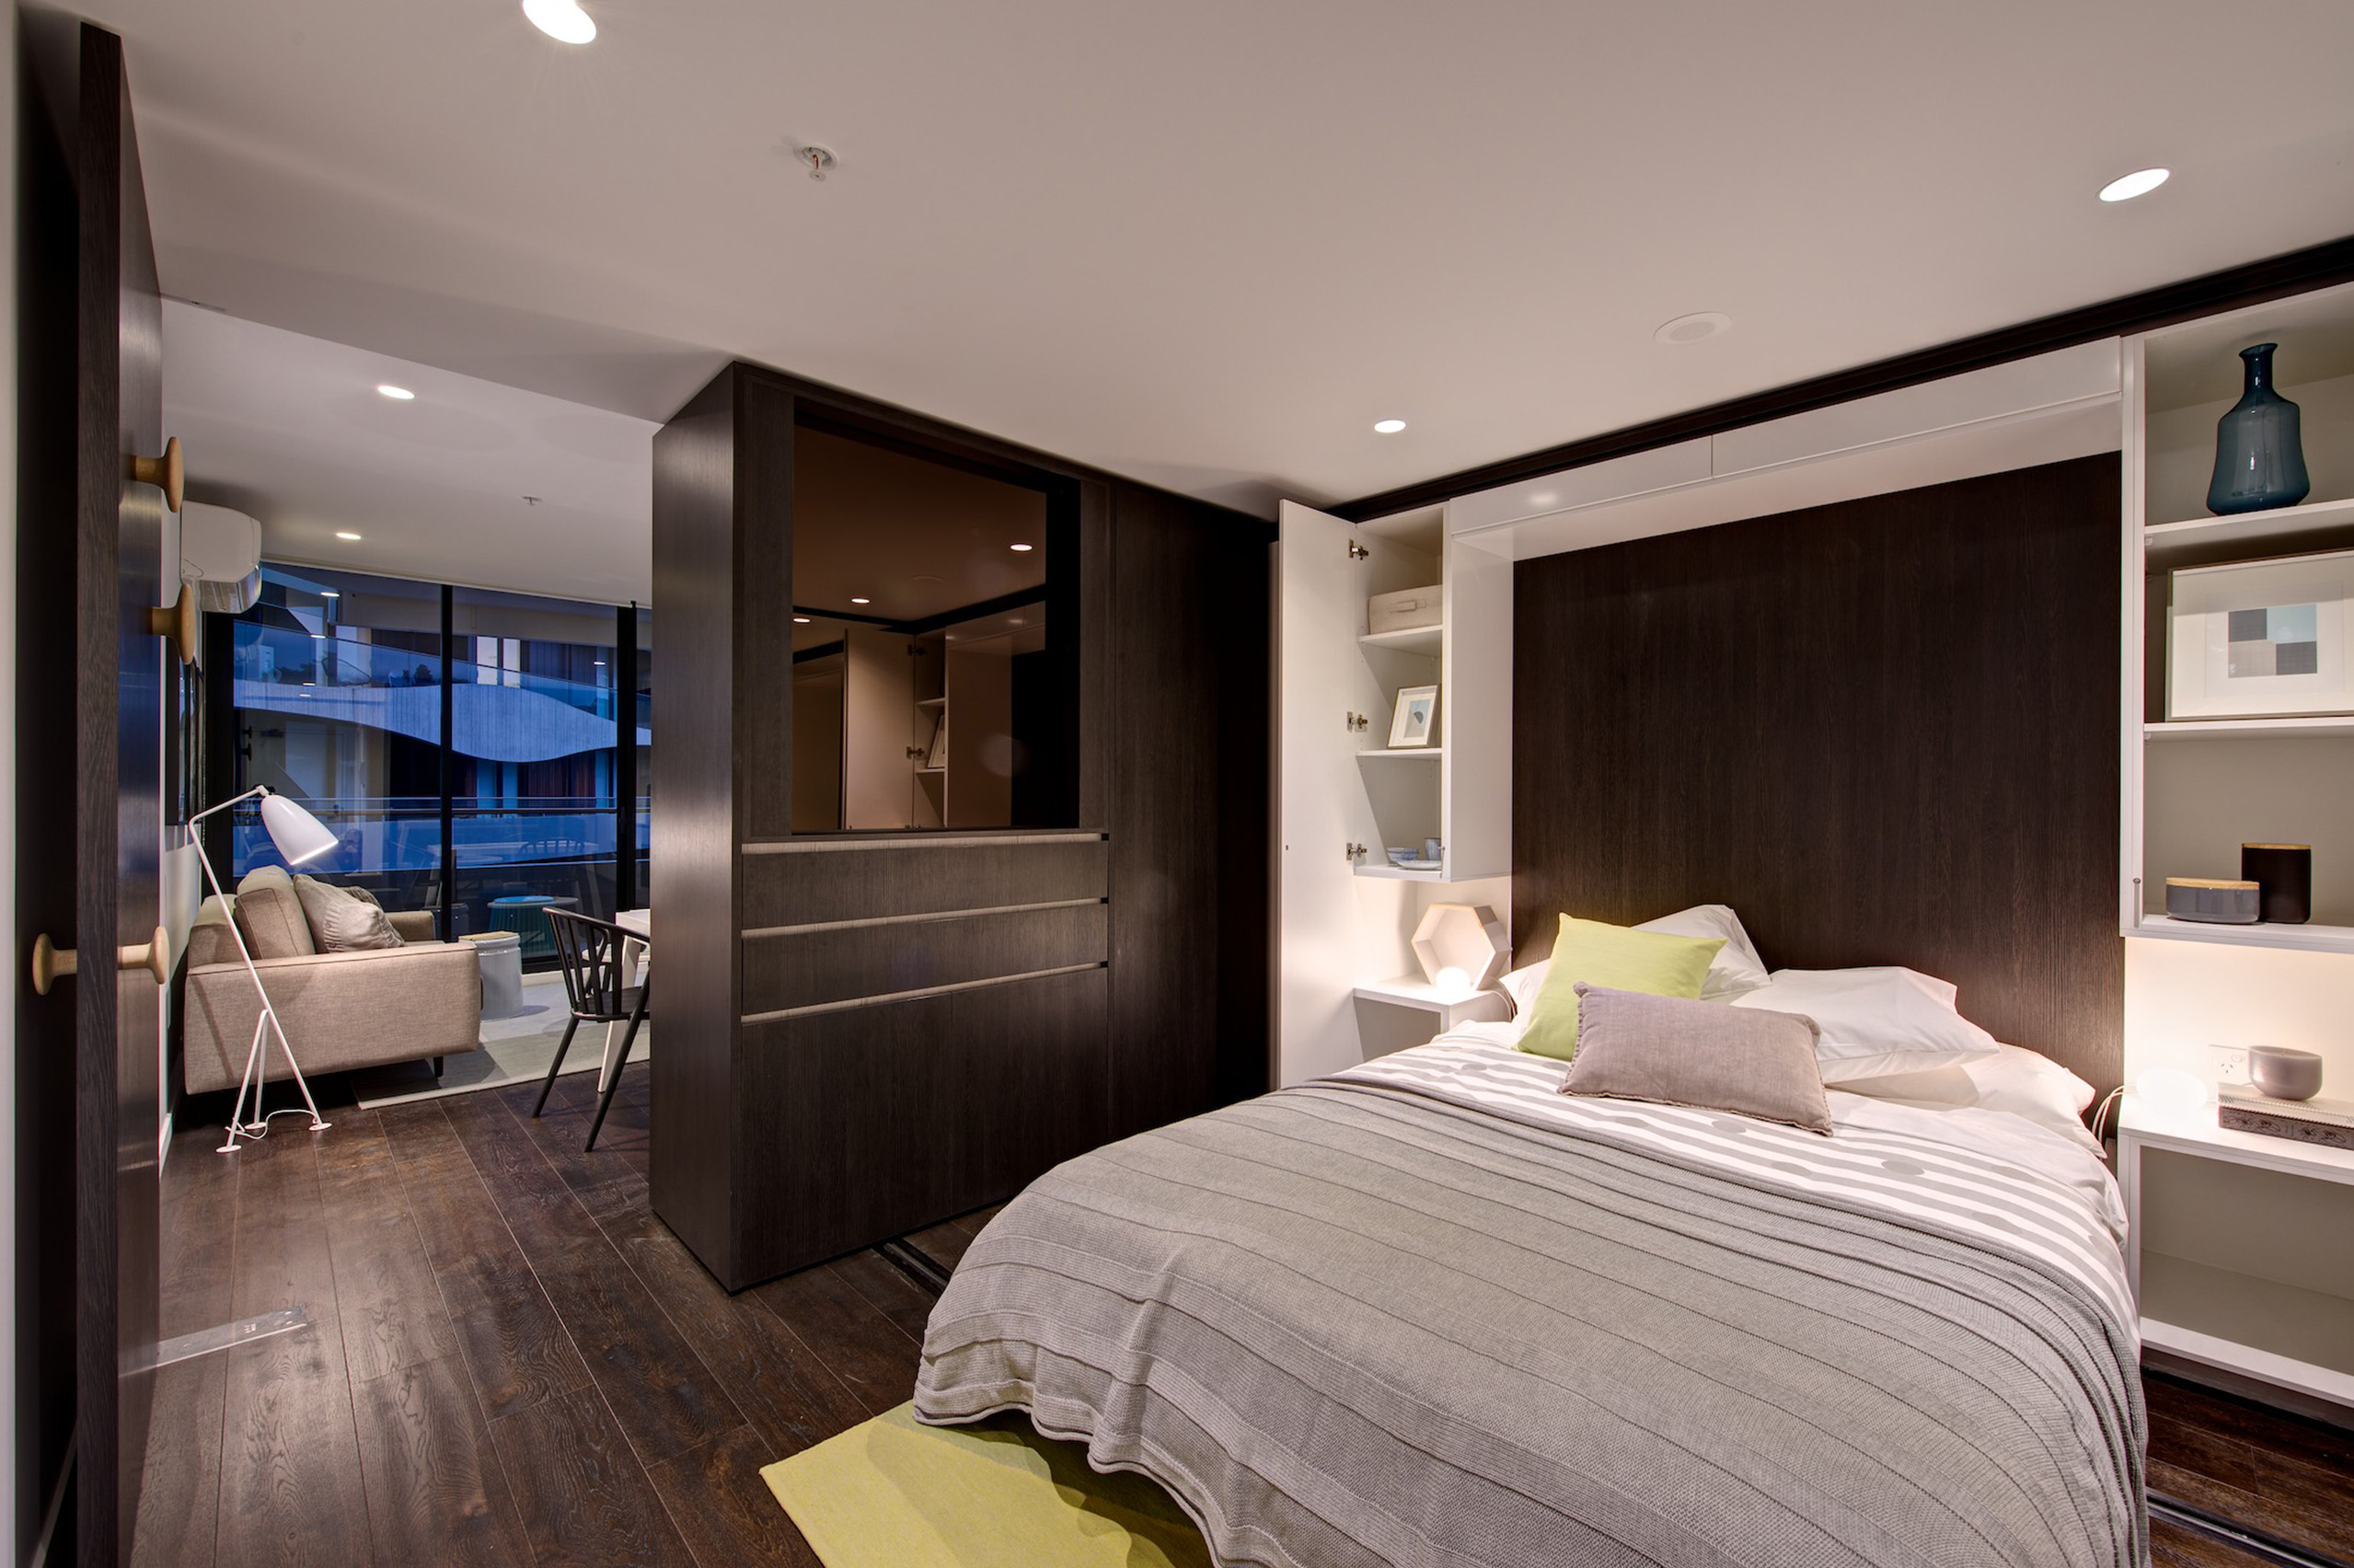 Modular bedroom